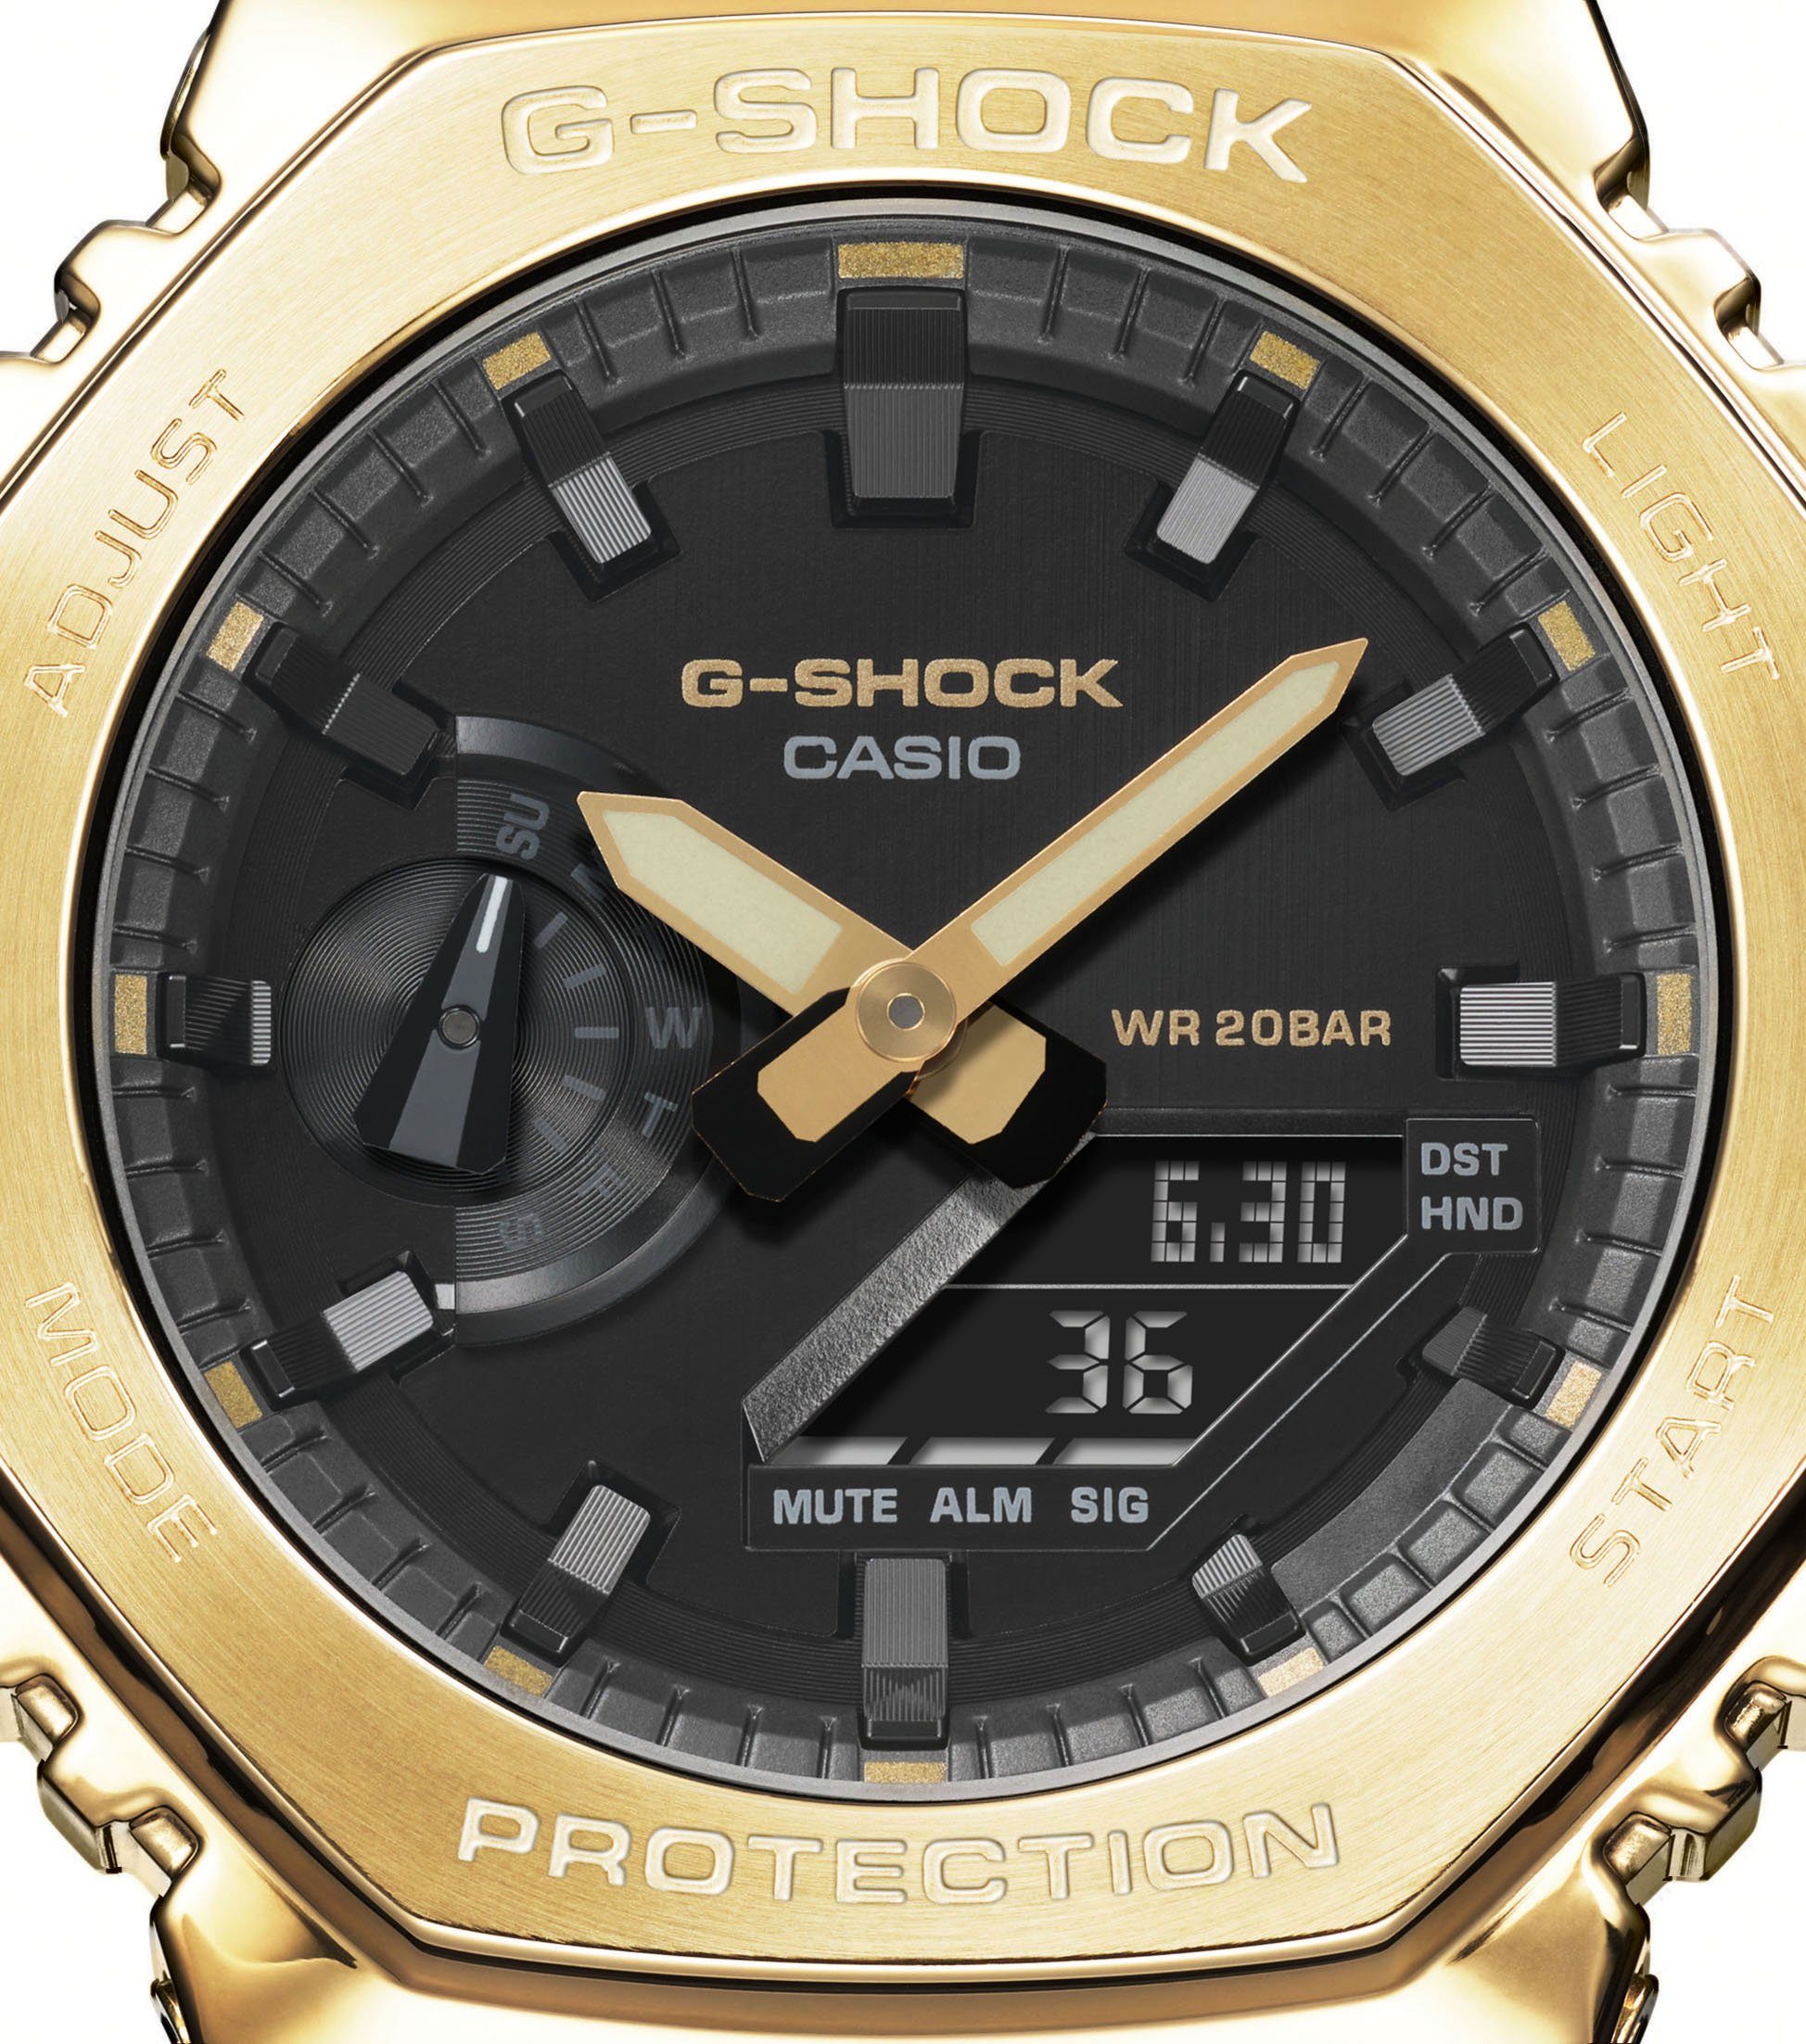 Chronograph GM-2100G-1A9ER CASIO G-SHOCK